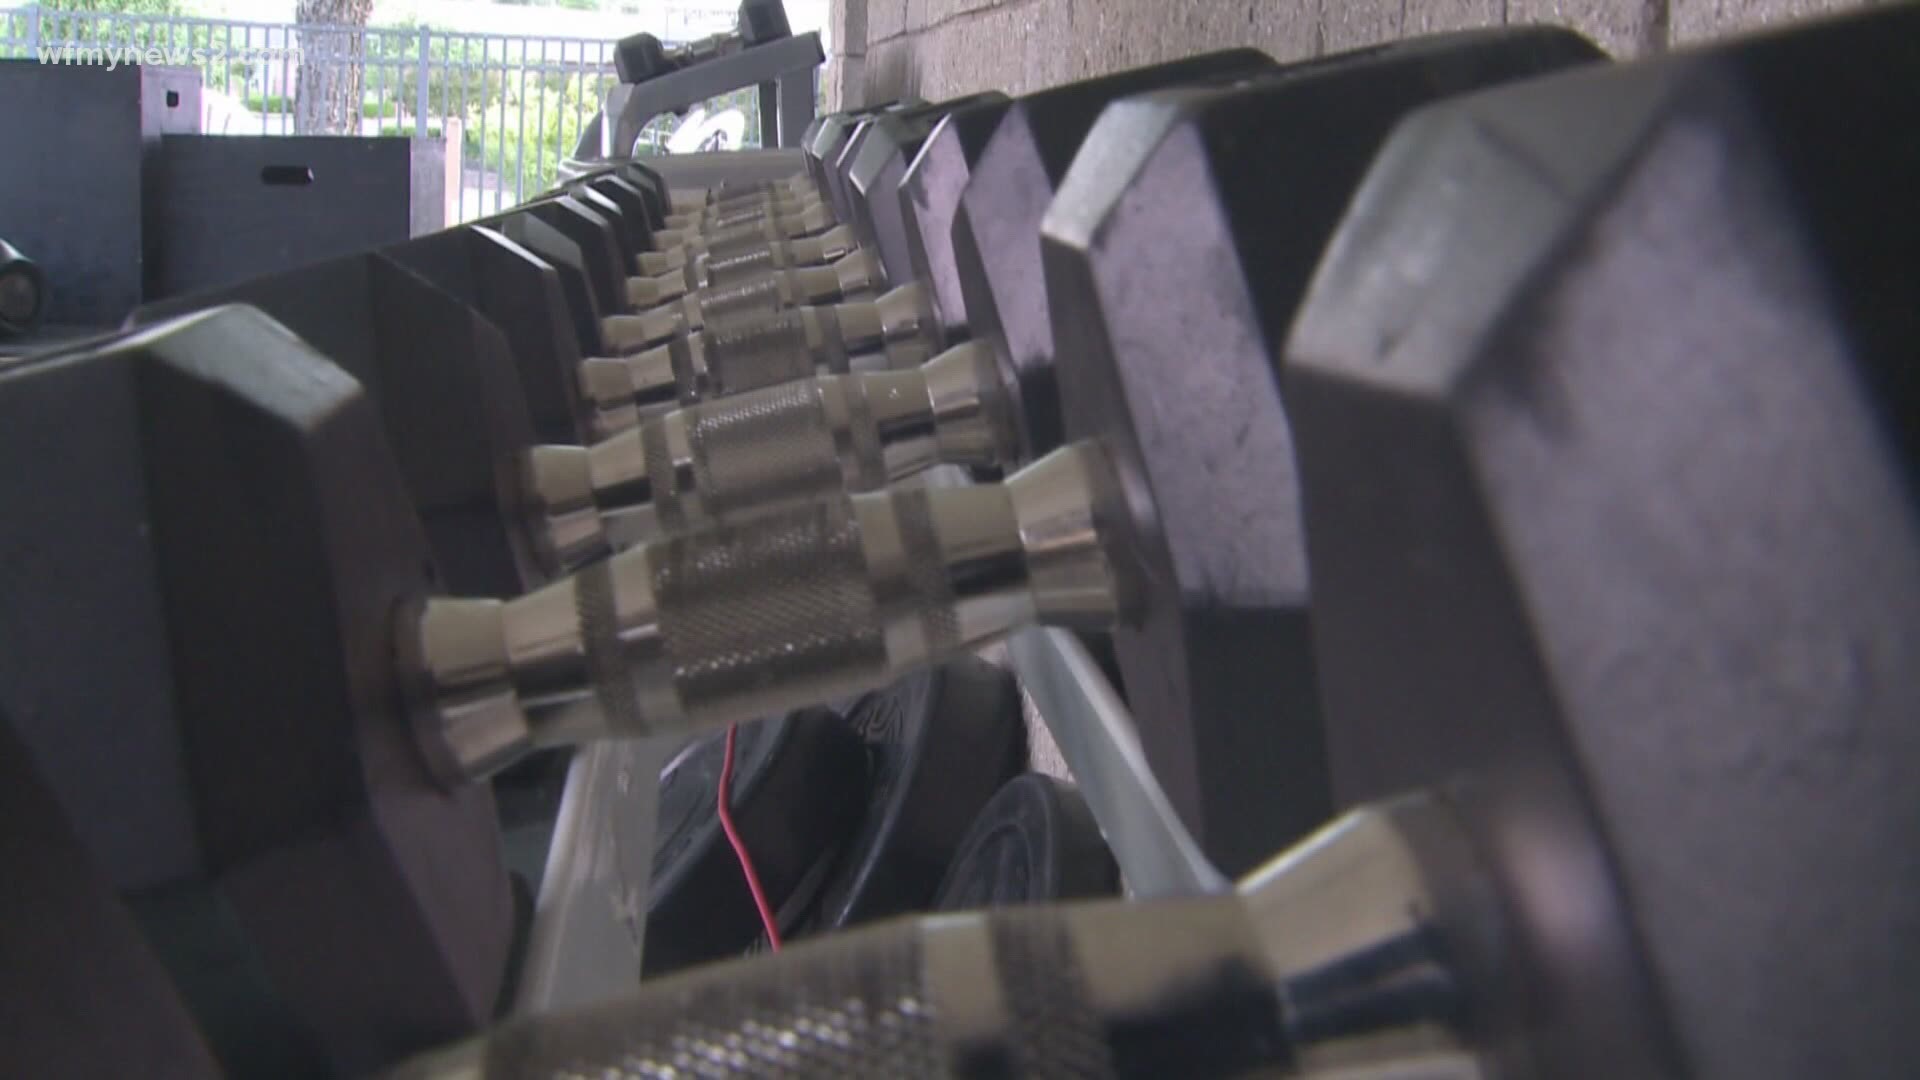 Gyms across North Carolina will reopen Friday at 30% capacity.